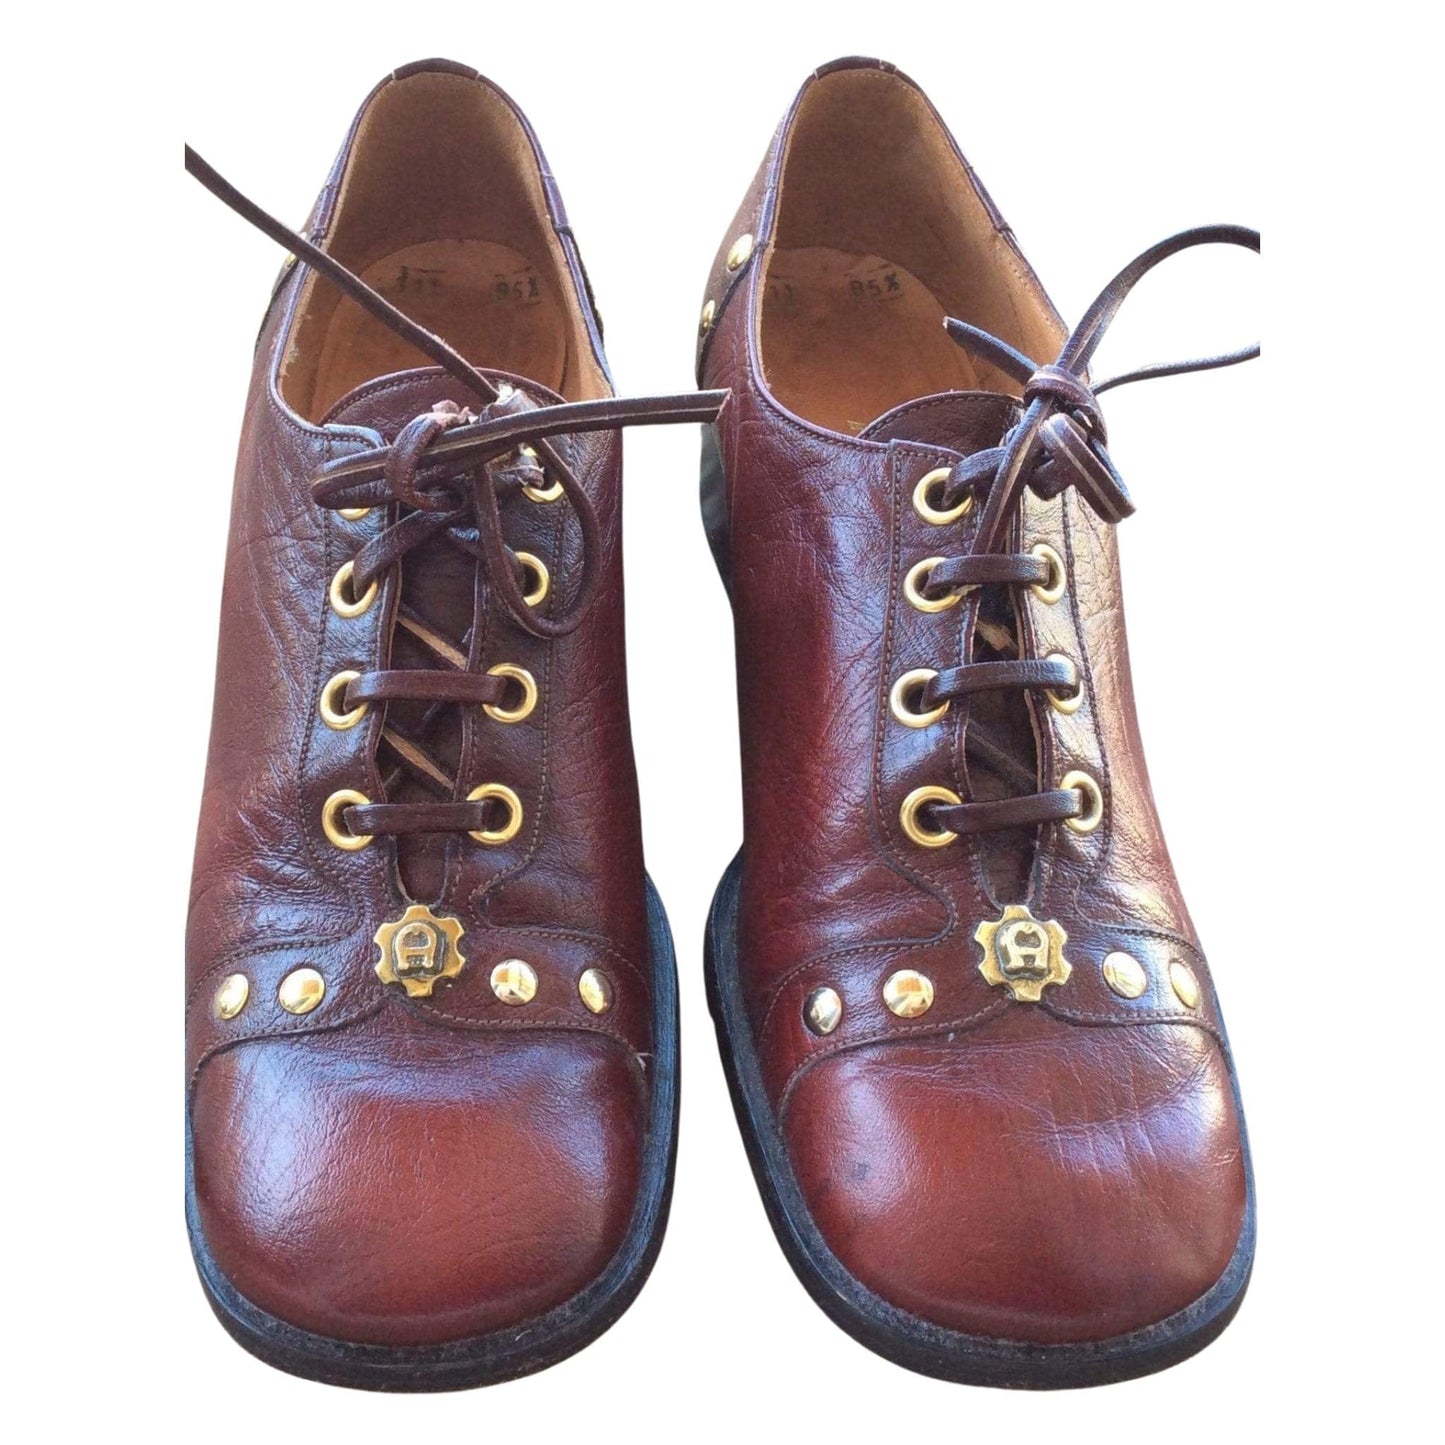 Aigner Studded Oxford Shoes 5.5 / Burgundy / Mod